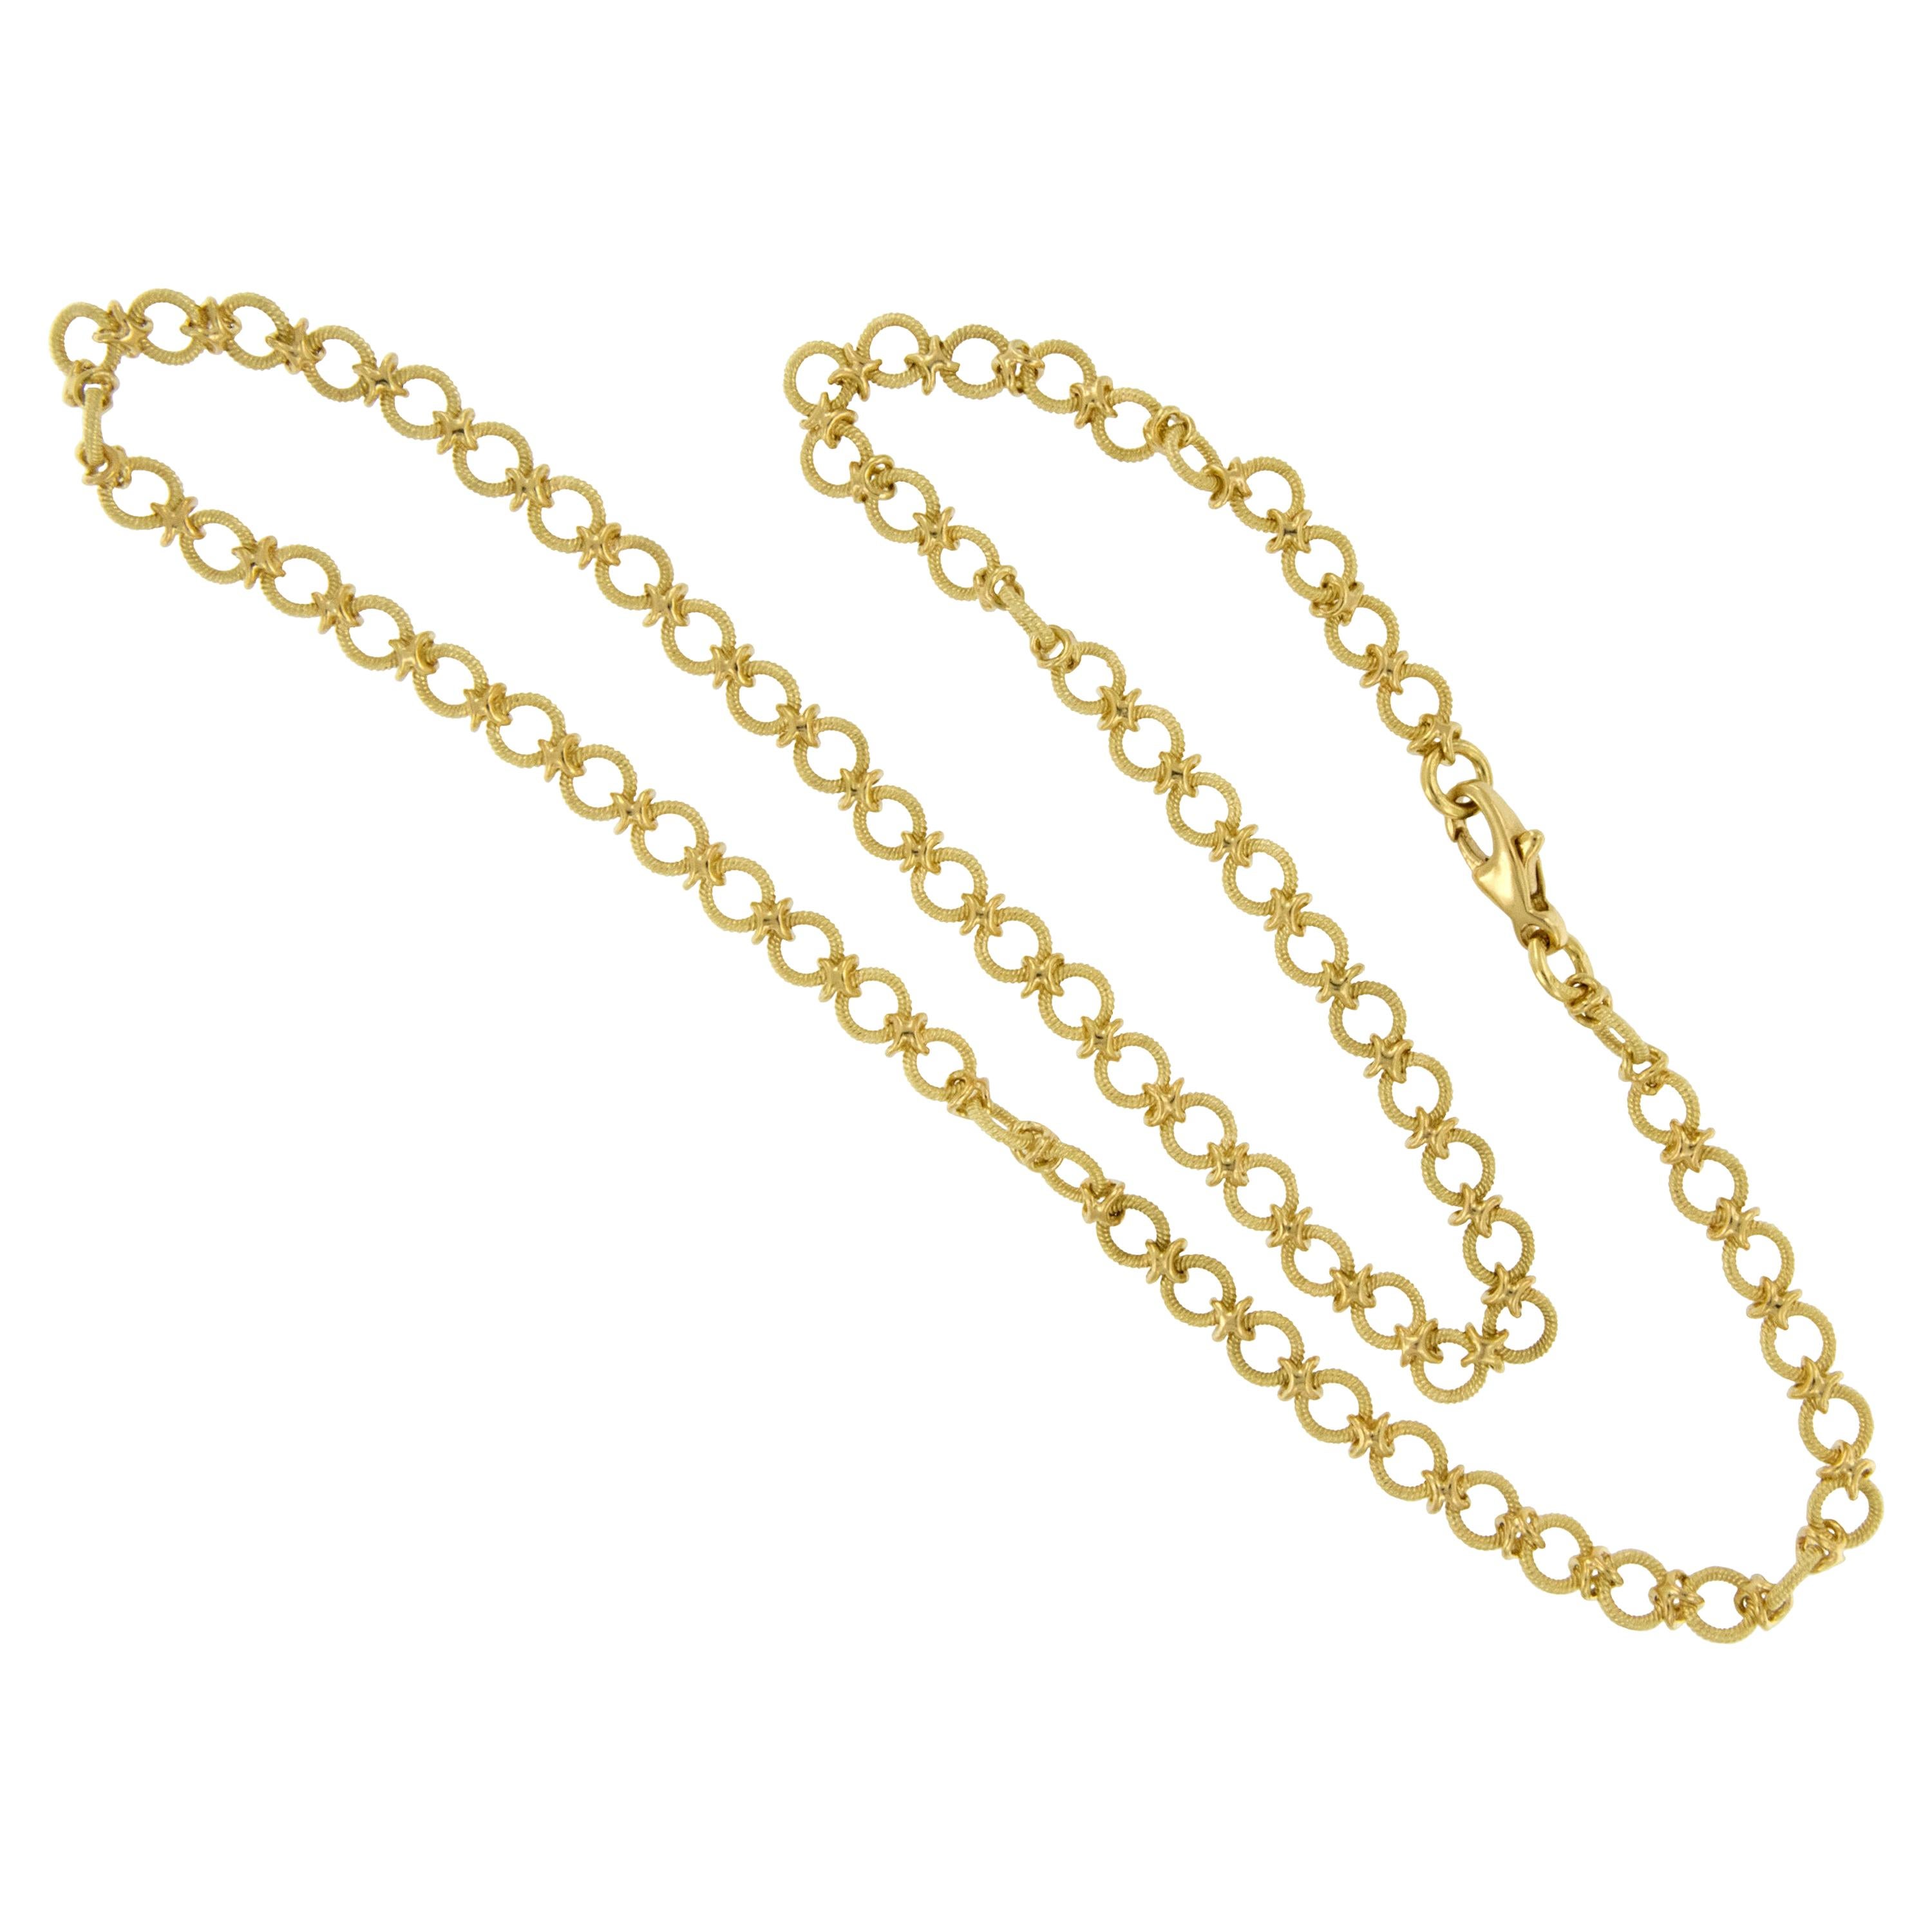 Italian "Handmade" 18 Karat Yellow Gold Chain Link Necklace